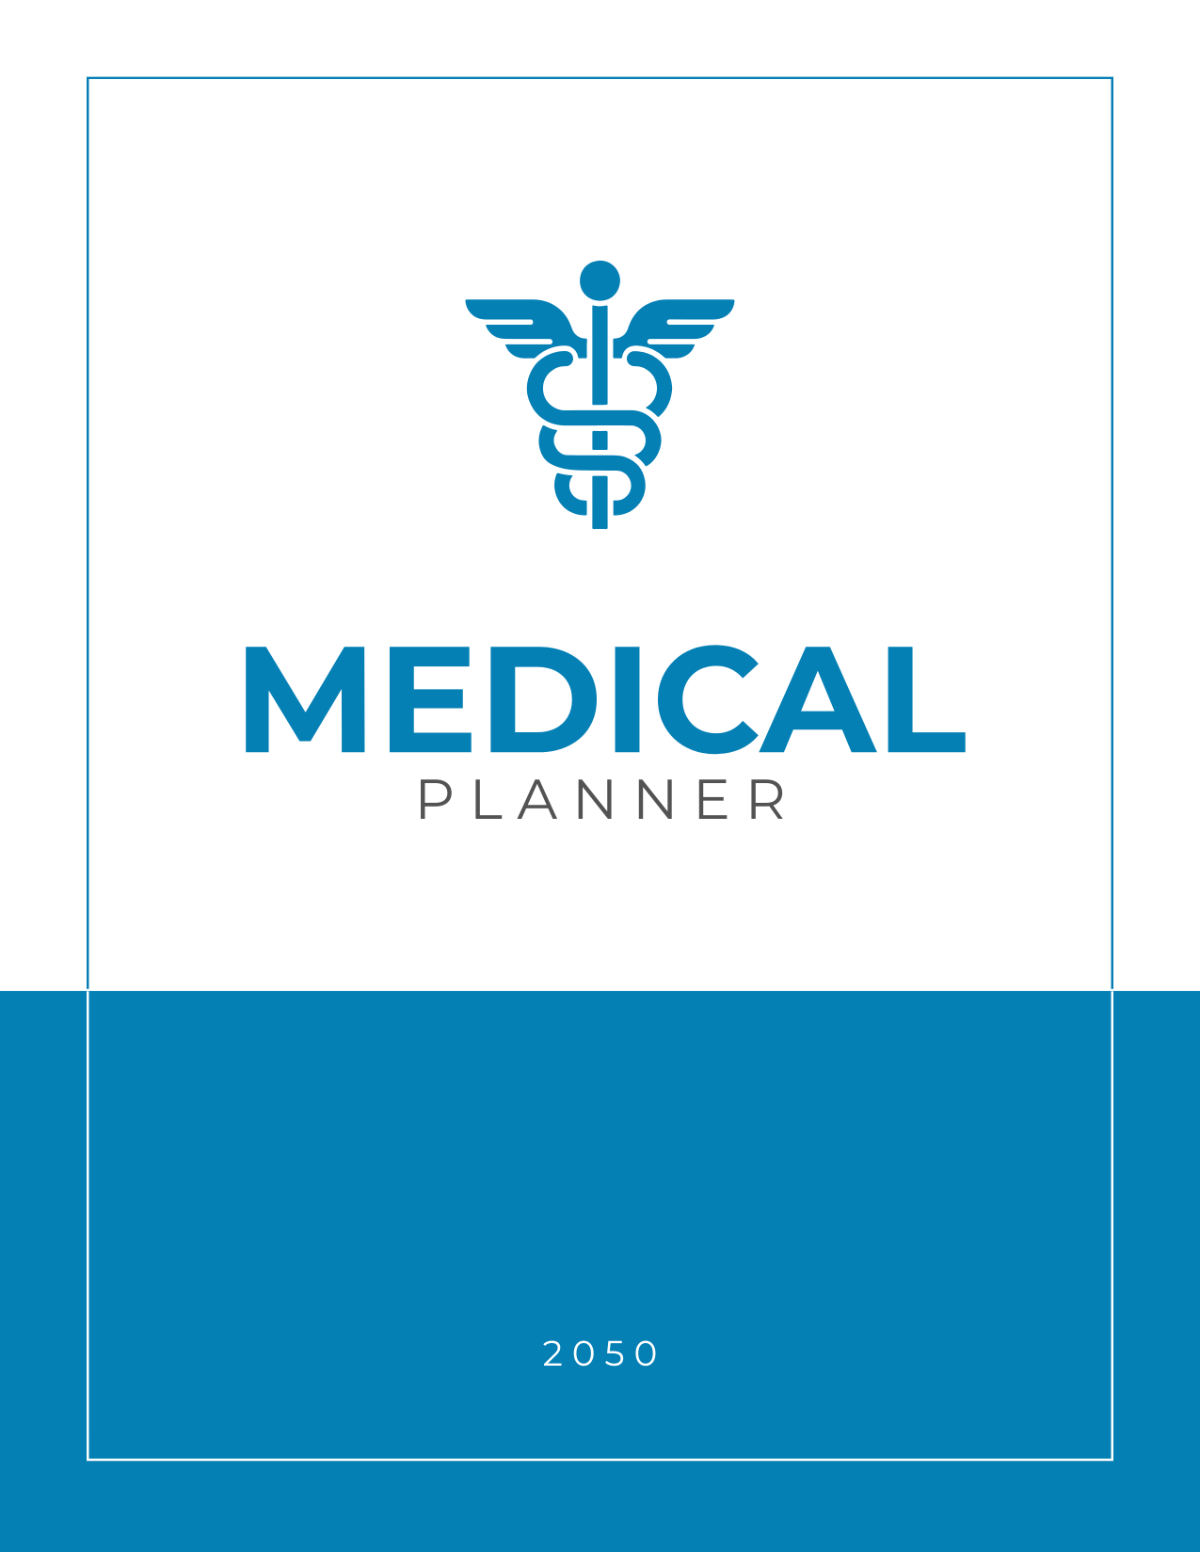 Medical Planner Template